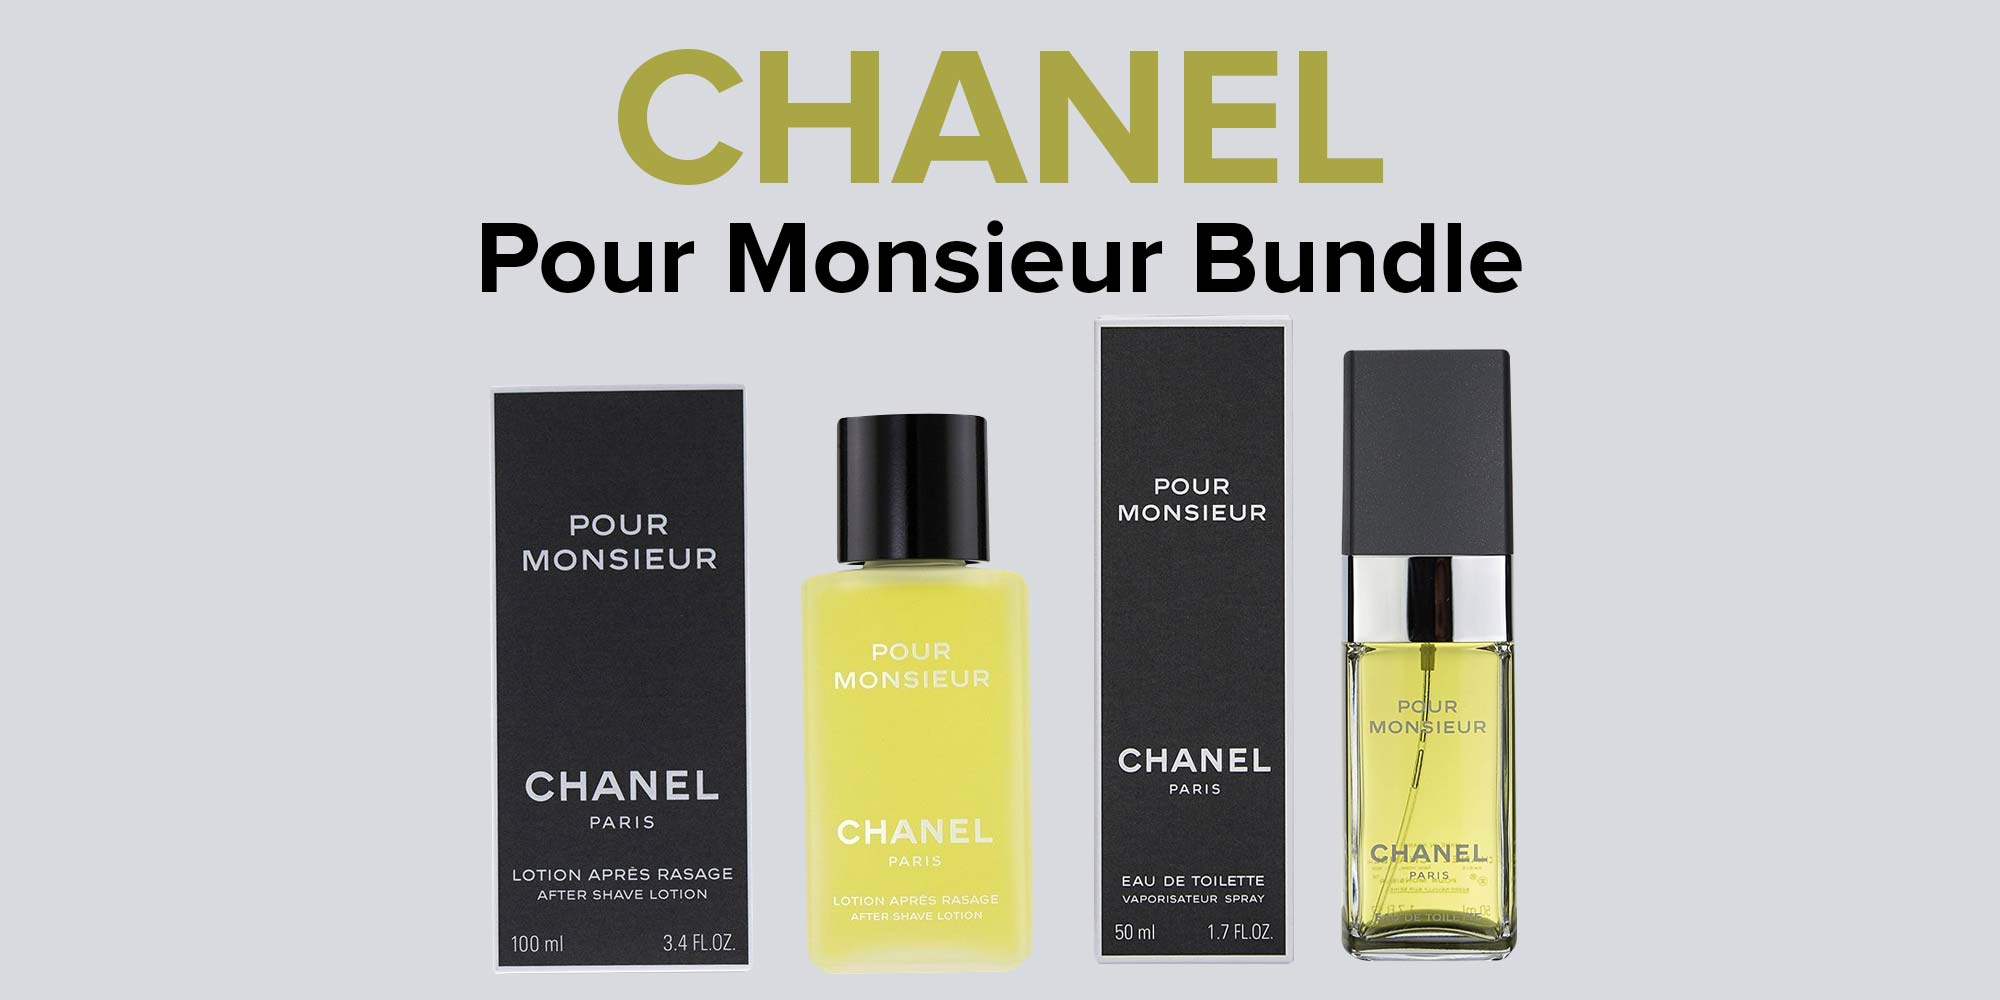 CHANEL Chanel Bundle Offer of Pour Monsieur EDT 50 ML+ After Shave Lotion  100 ML Pour Monsieur EDT 50 Ml, After Shave Lotion 100ml KSA